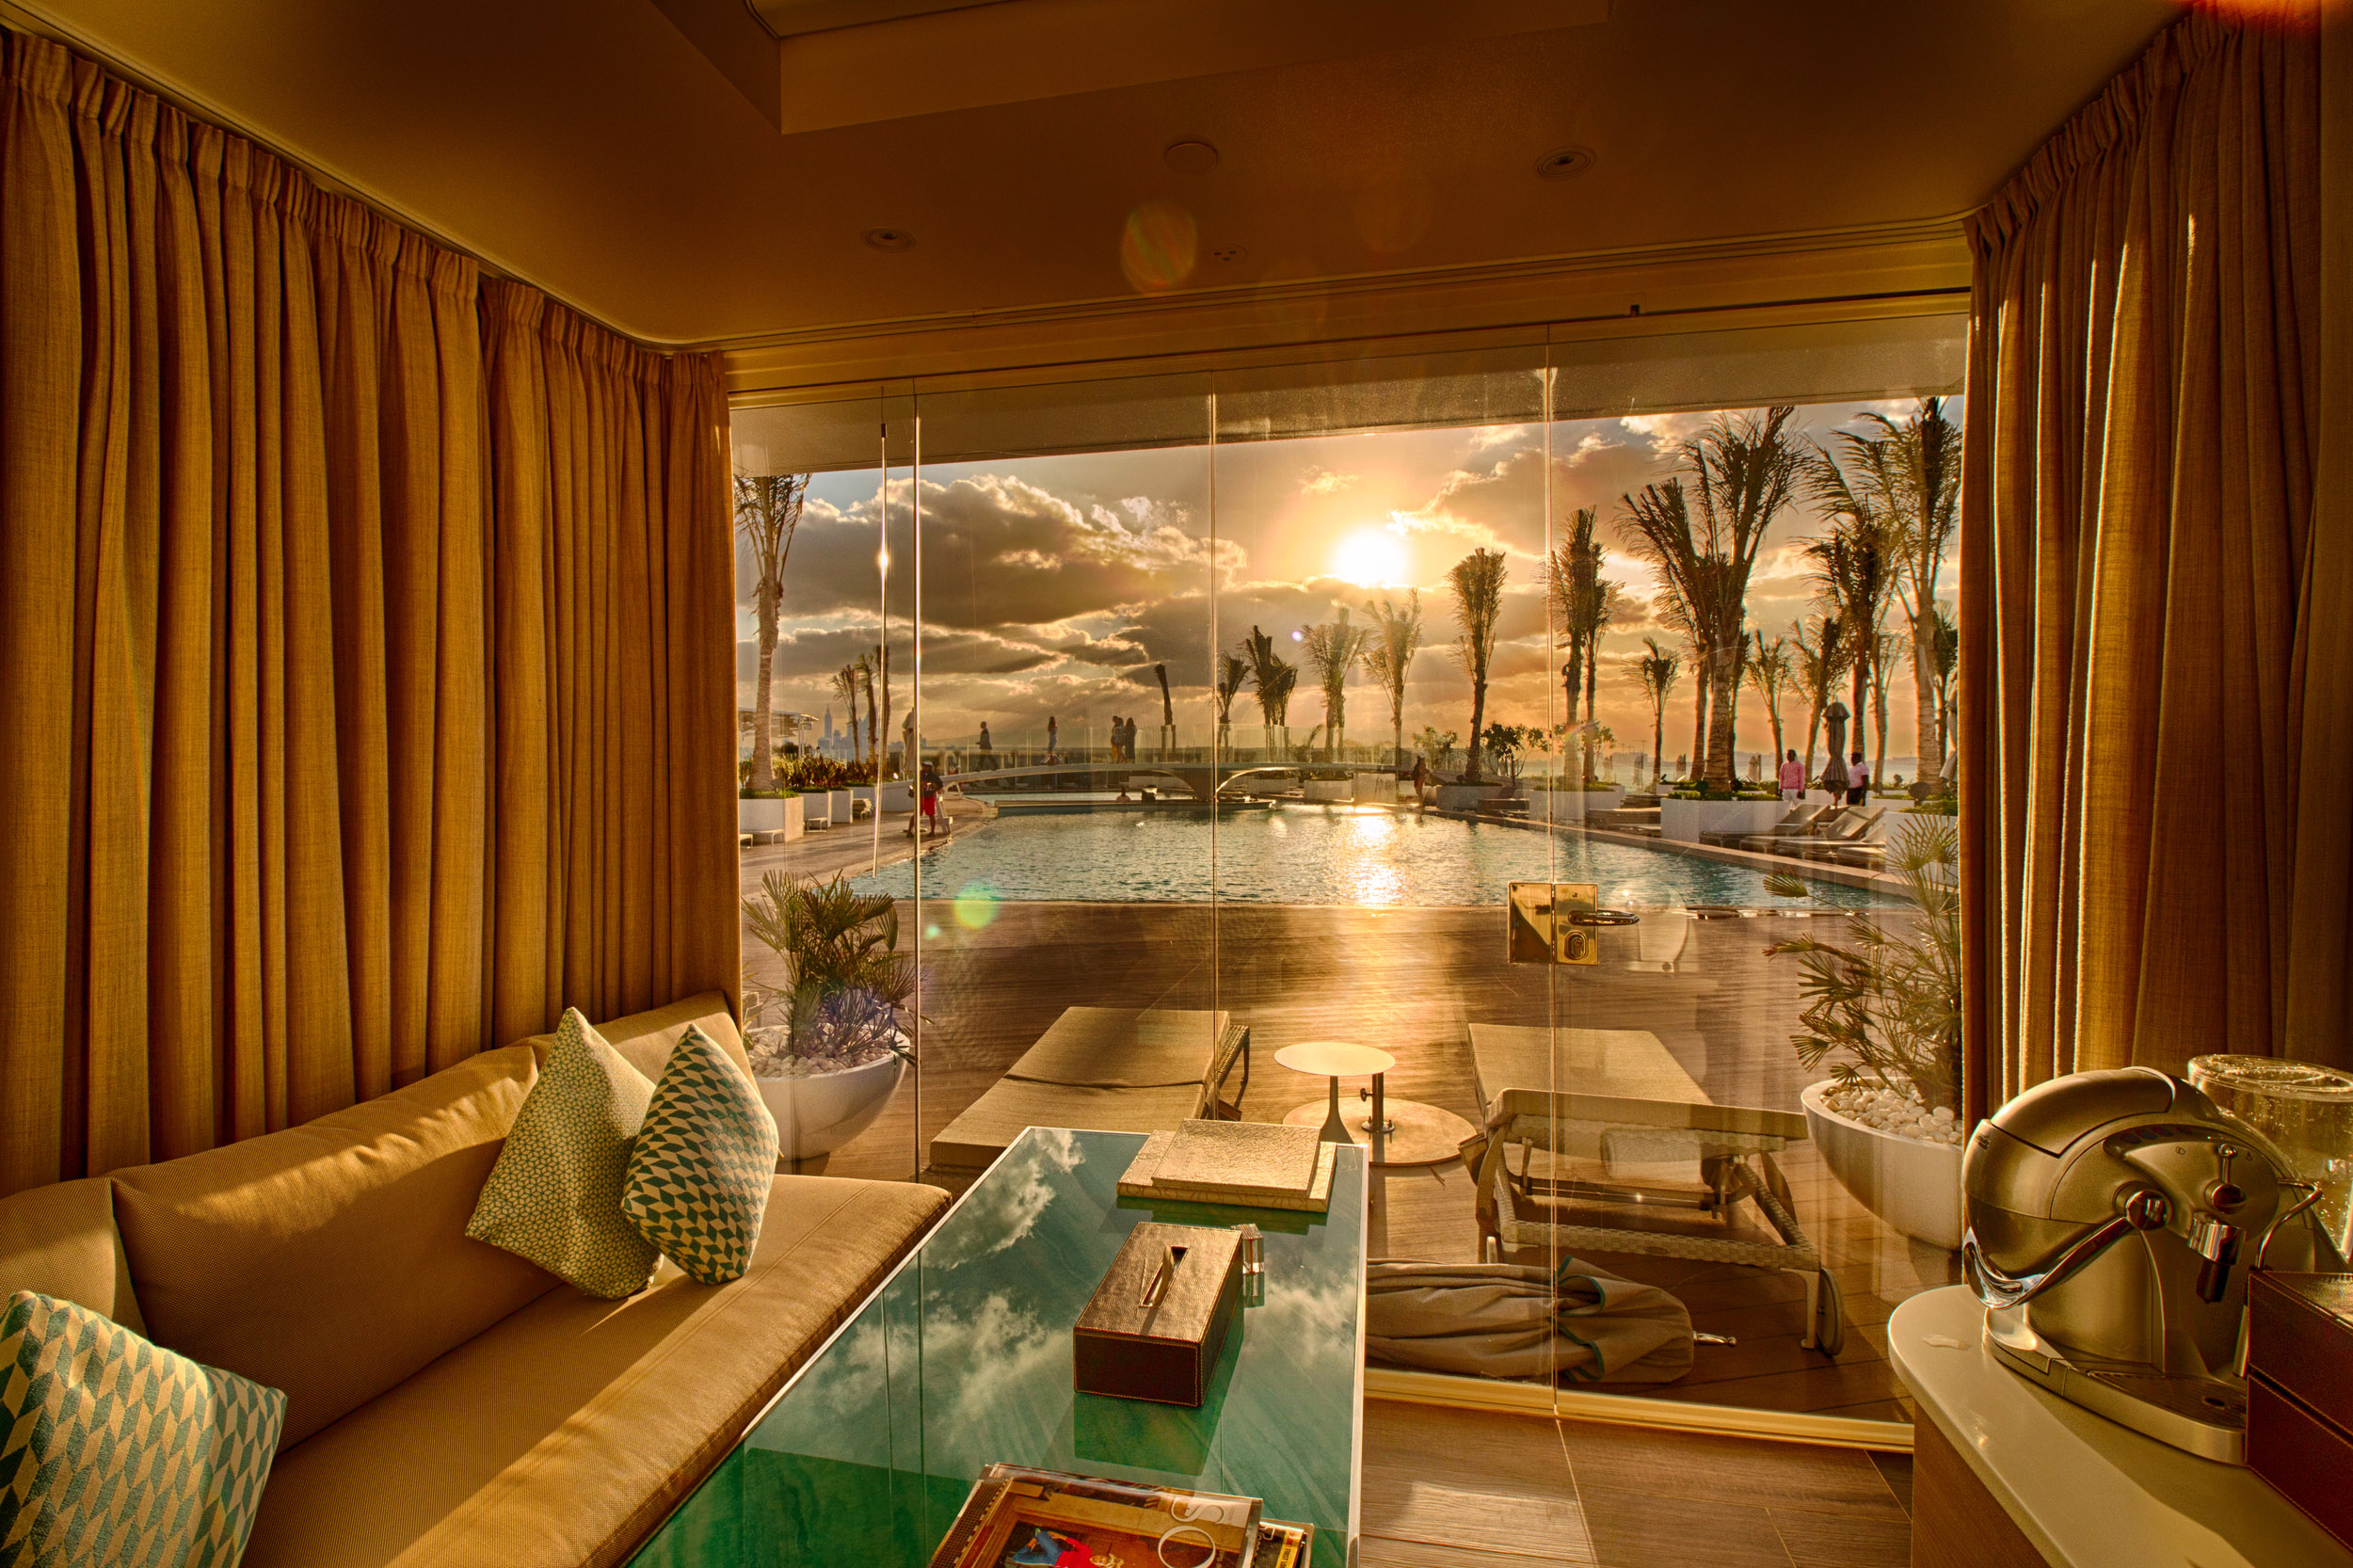 Burj Al Arab Beach Club - Interior and Architecture Photography